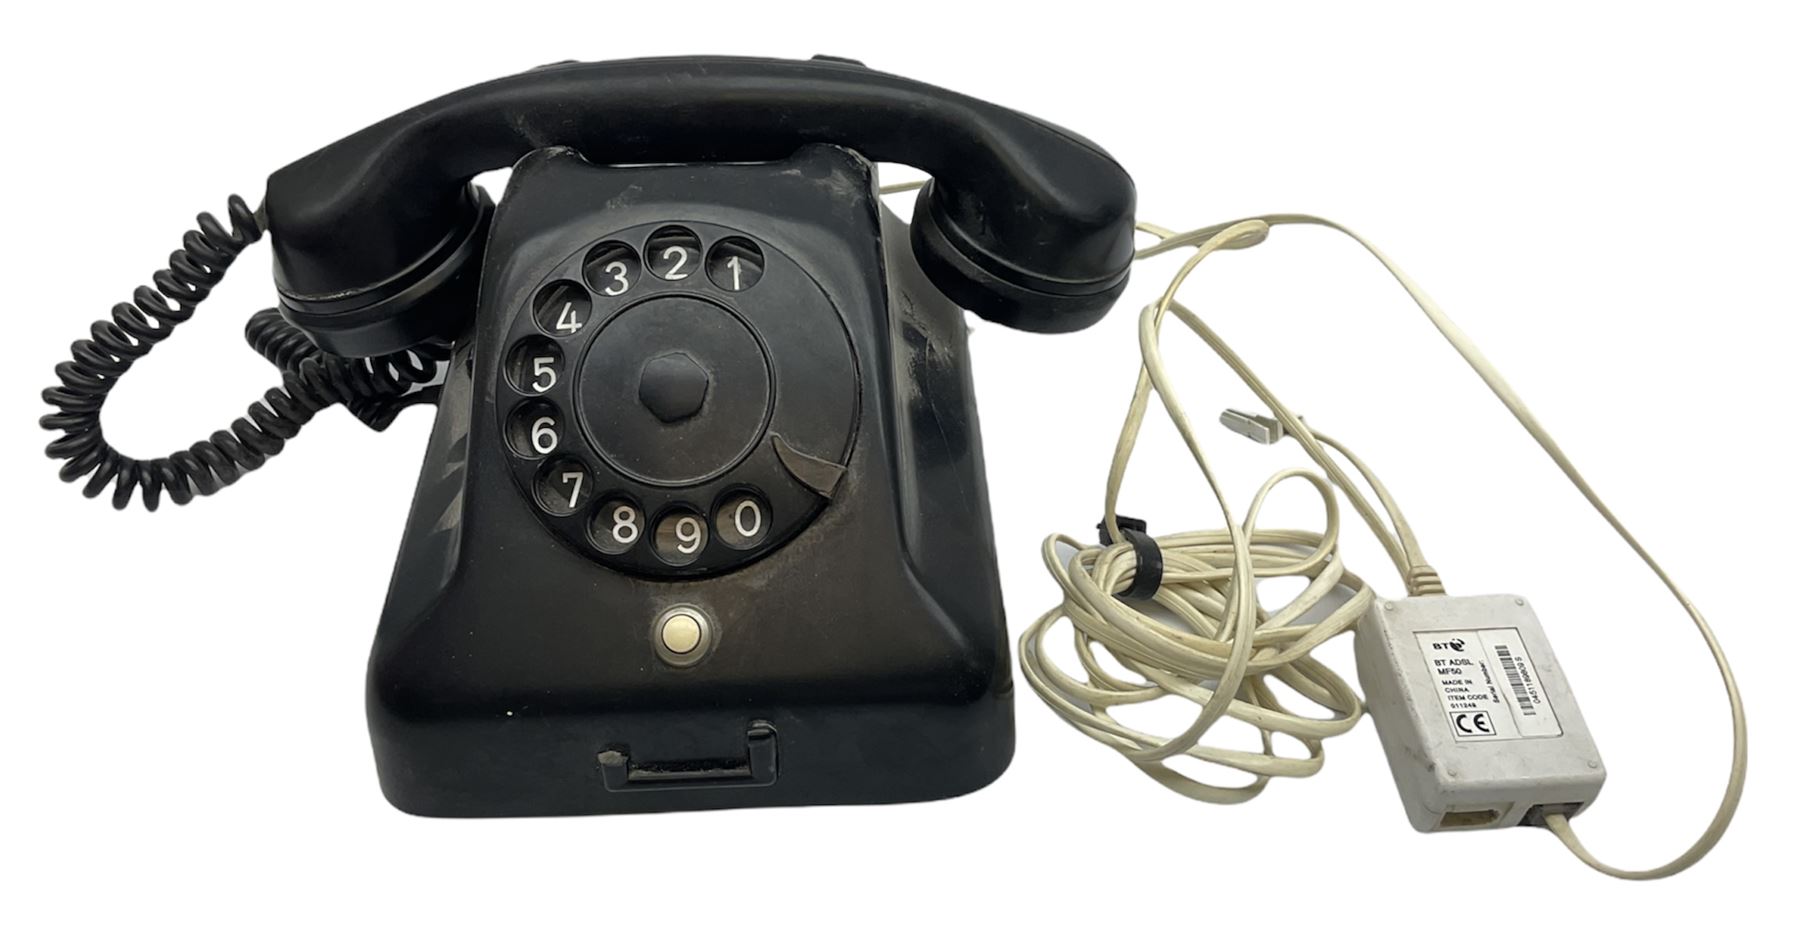 Black Bakelite telephone with rotary dial